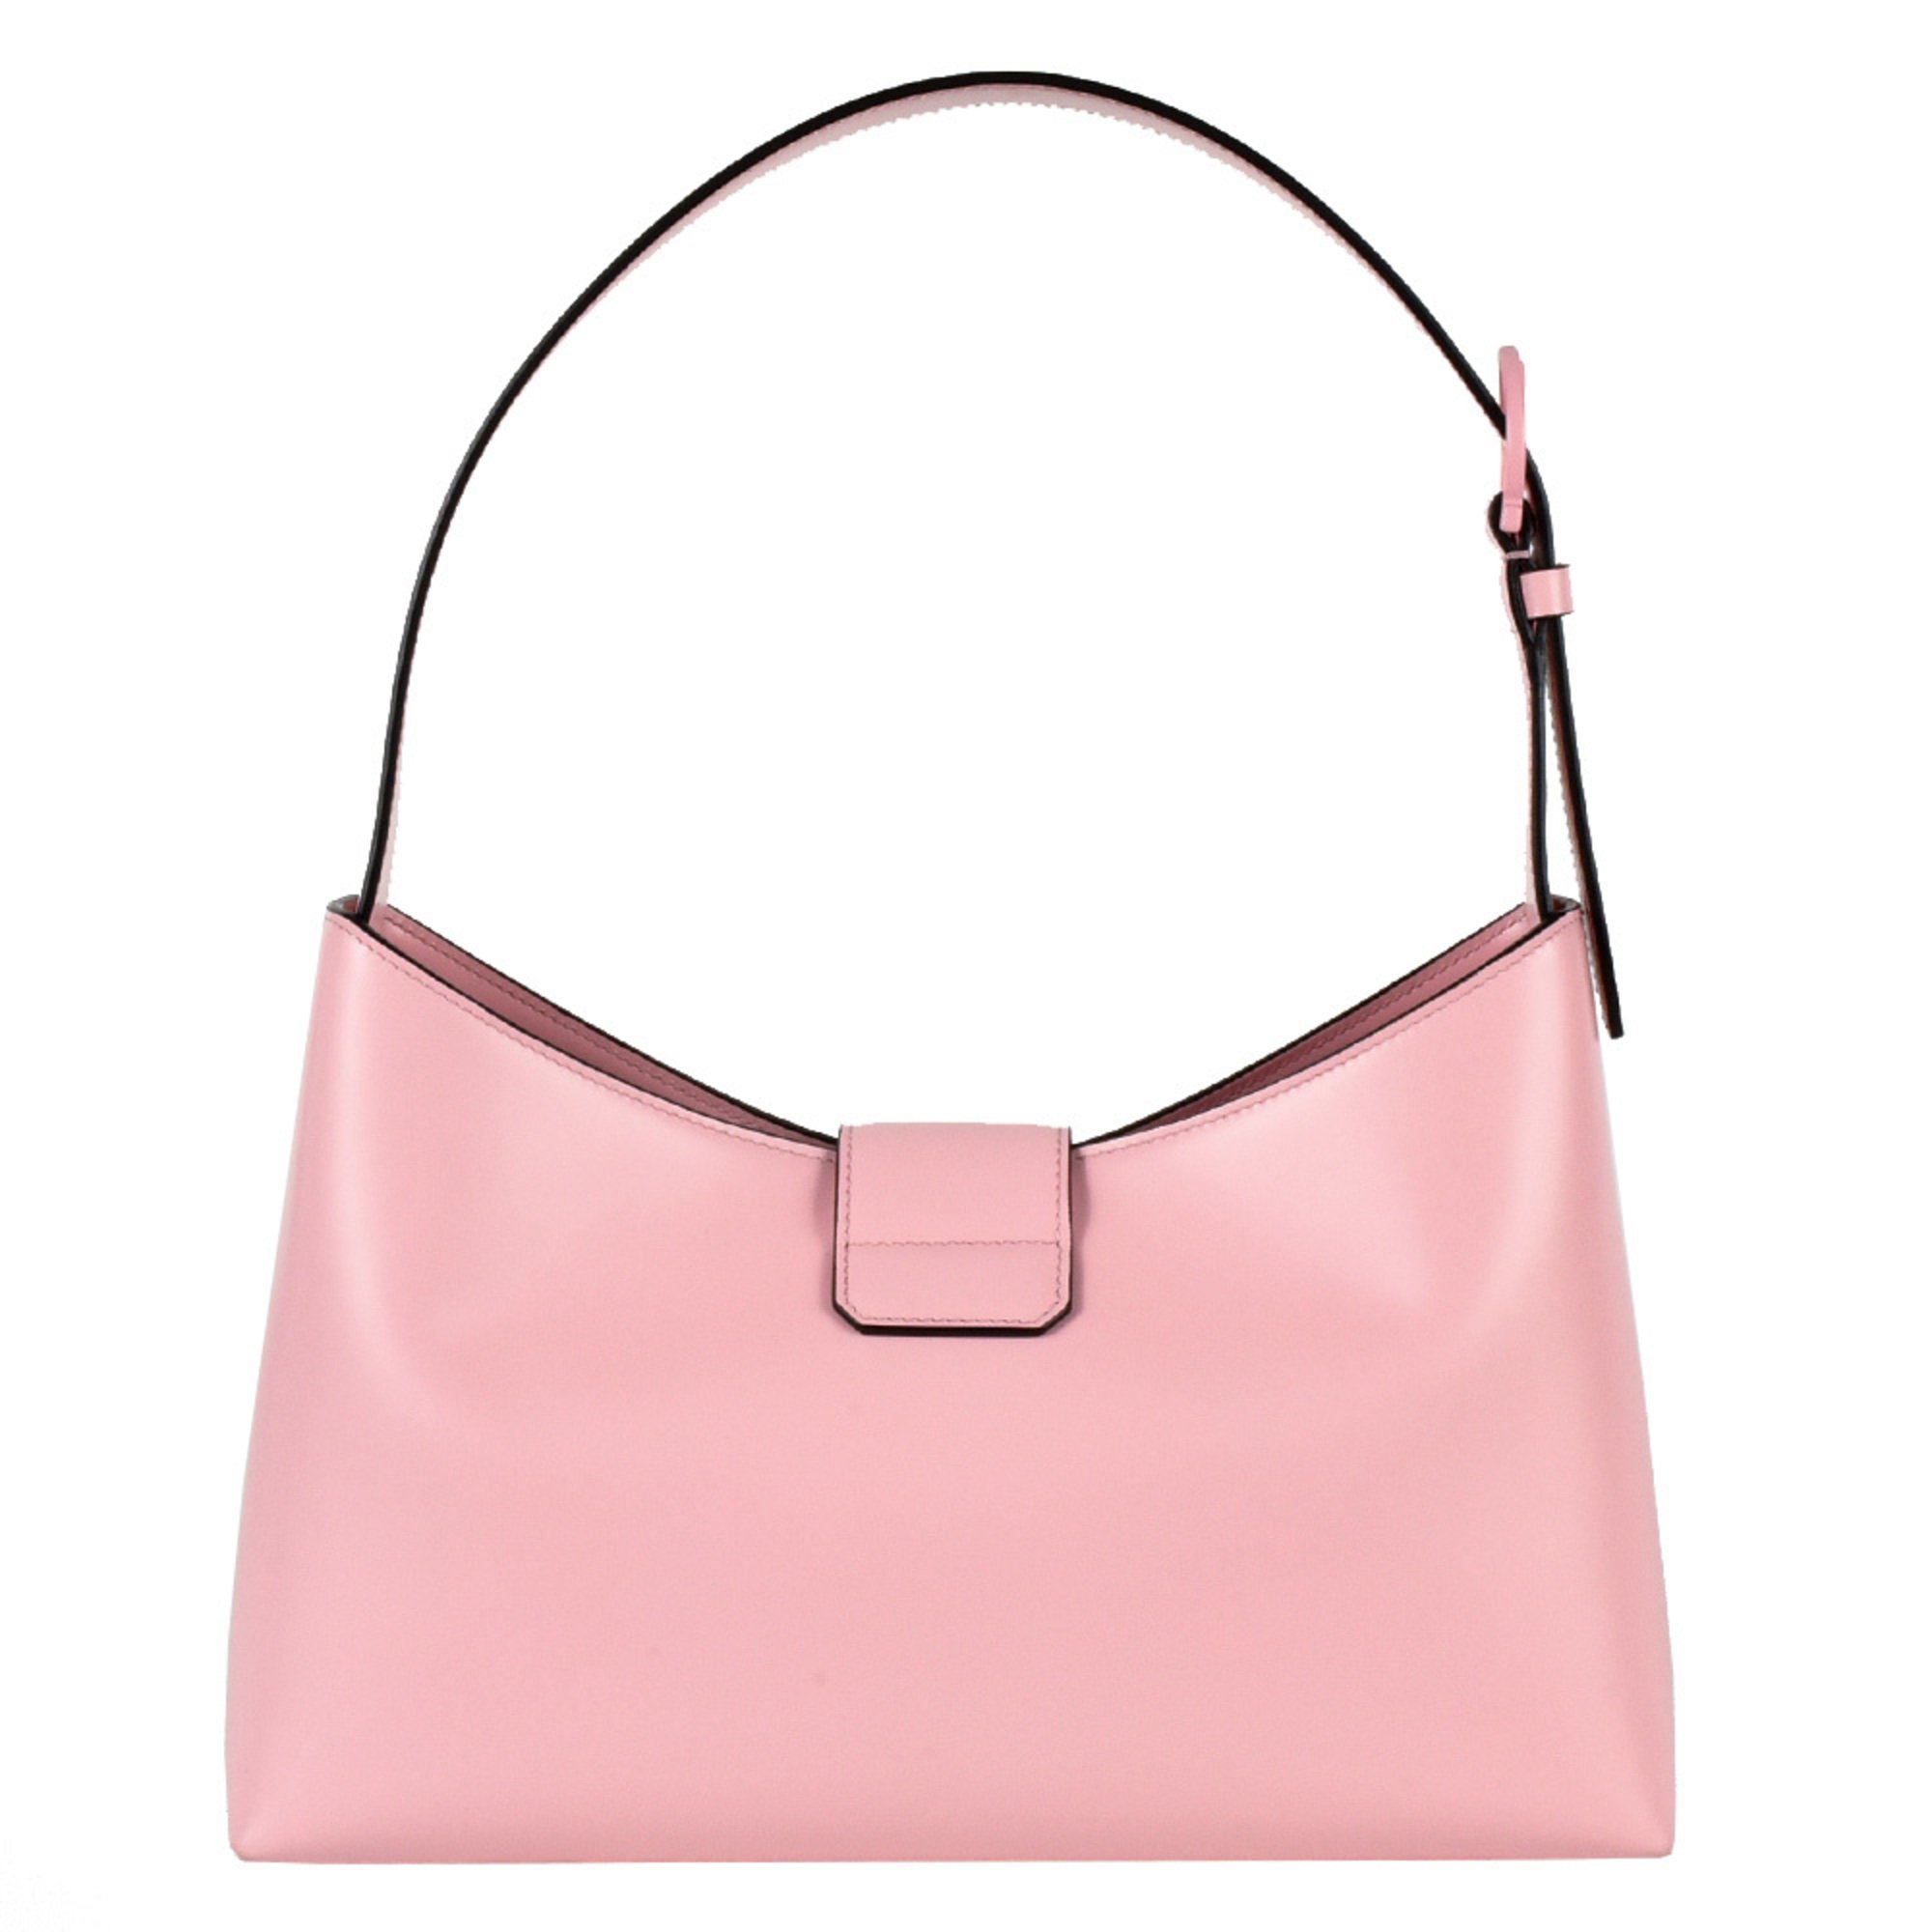 Salvatore Ferragamo Ferragamo Gancini Trifoglio Shoulder Bag Leather EZ-21 0926 Pink